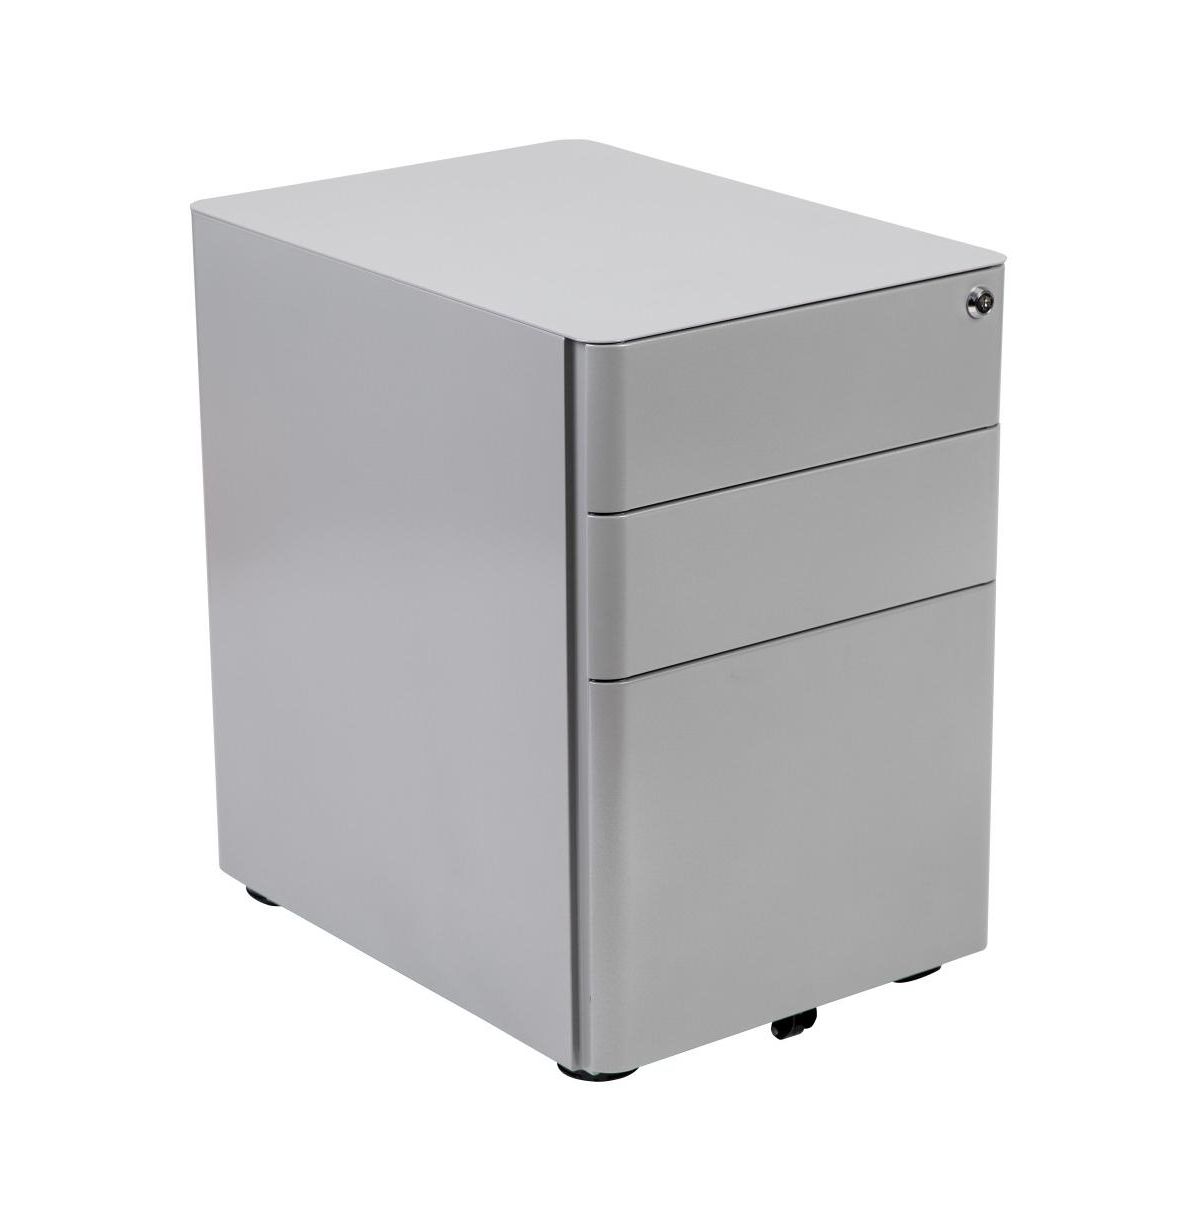 Emma+oliver Modern 3-drawer Mobile Locking Filing Cabinet Storage Organizer In Gray